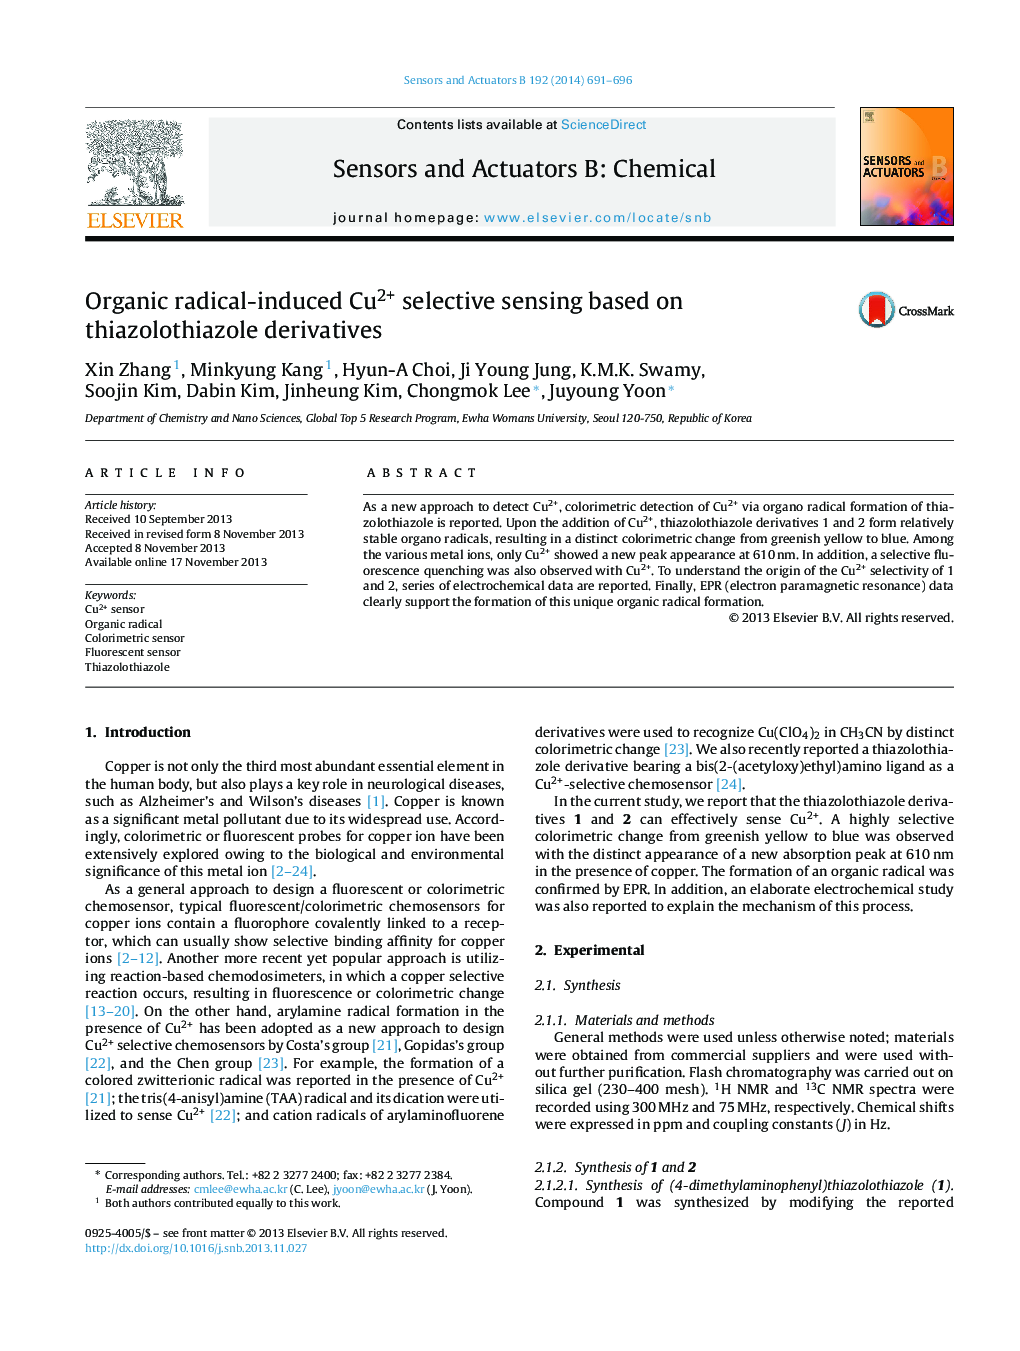 Organic radical-induced Cu2+ selective sensing based on thiazolothiazole derivatives